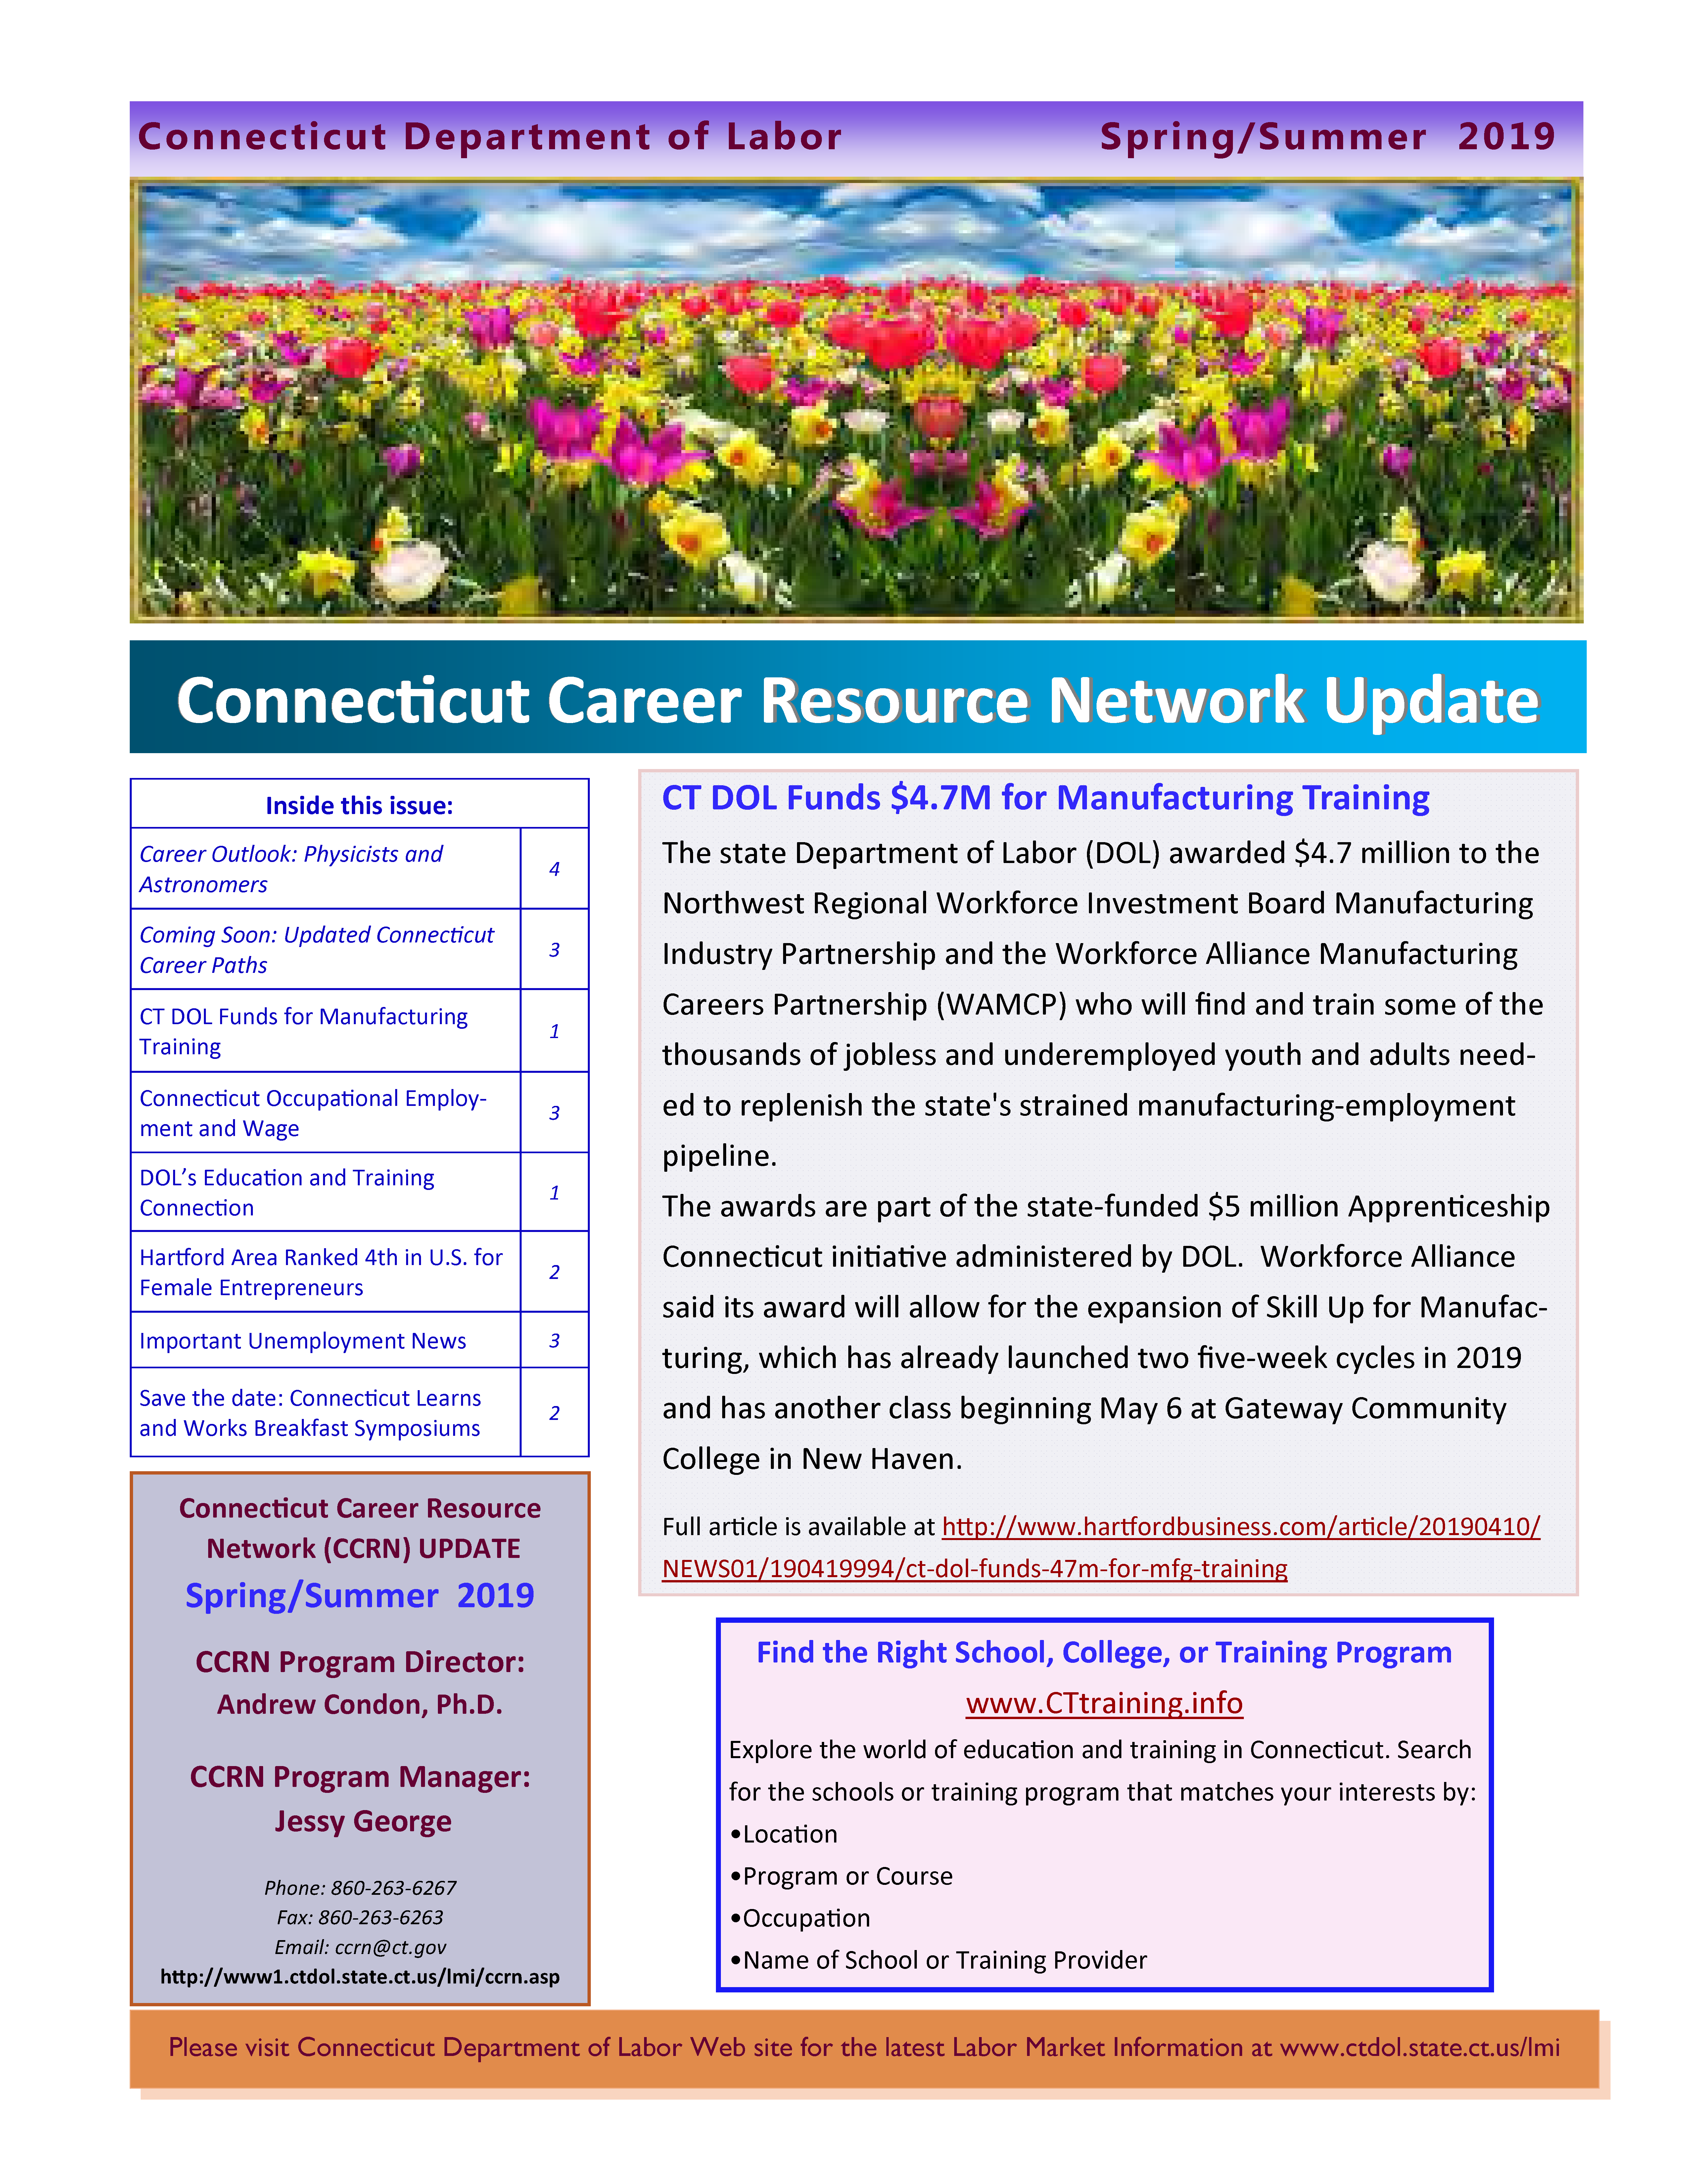 Connecticut Career Resource Network Update